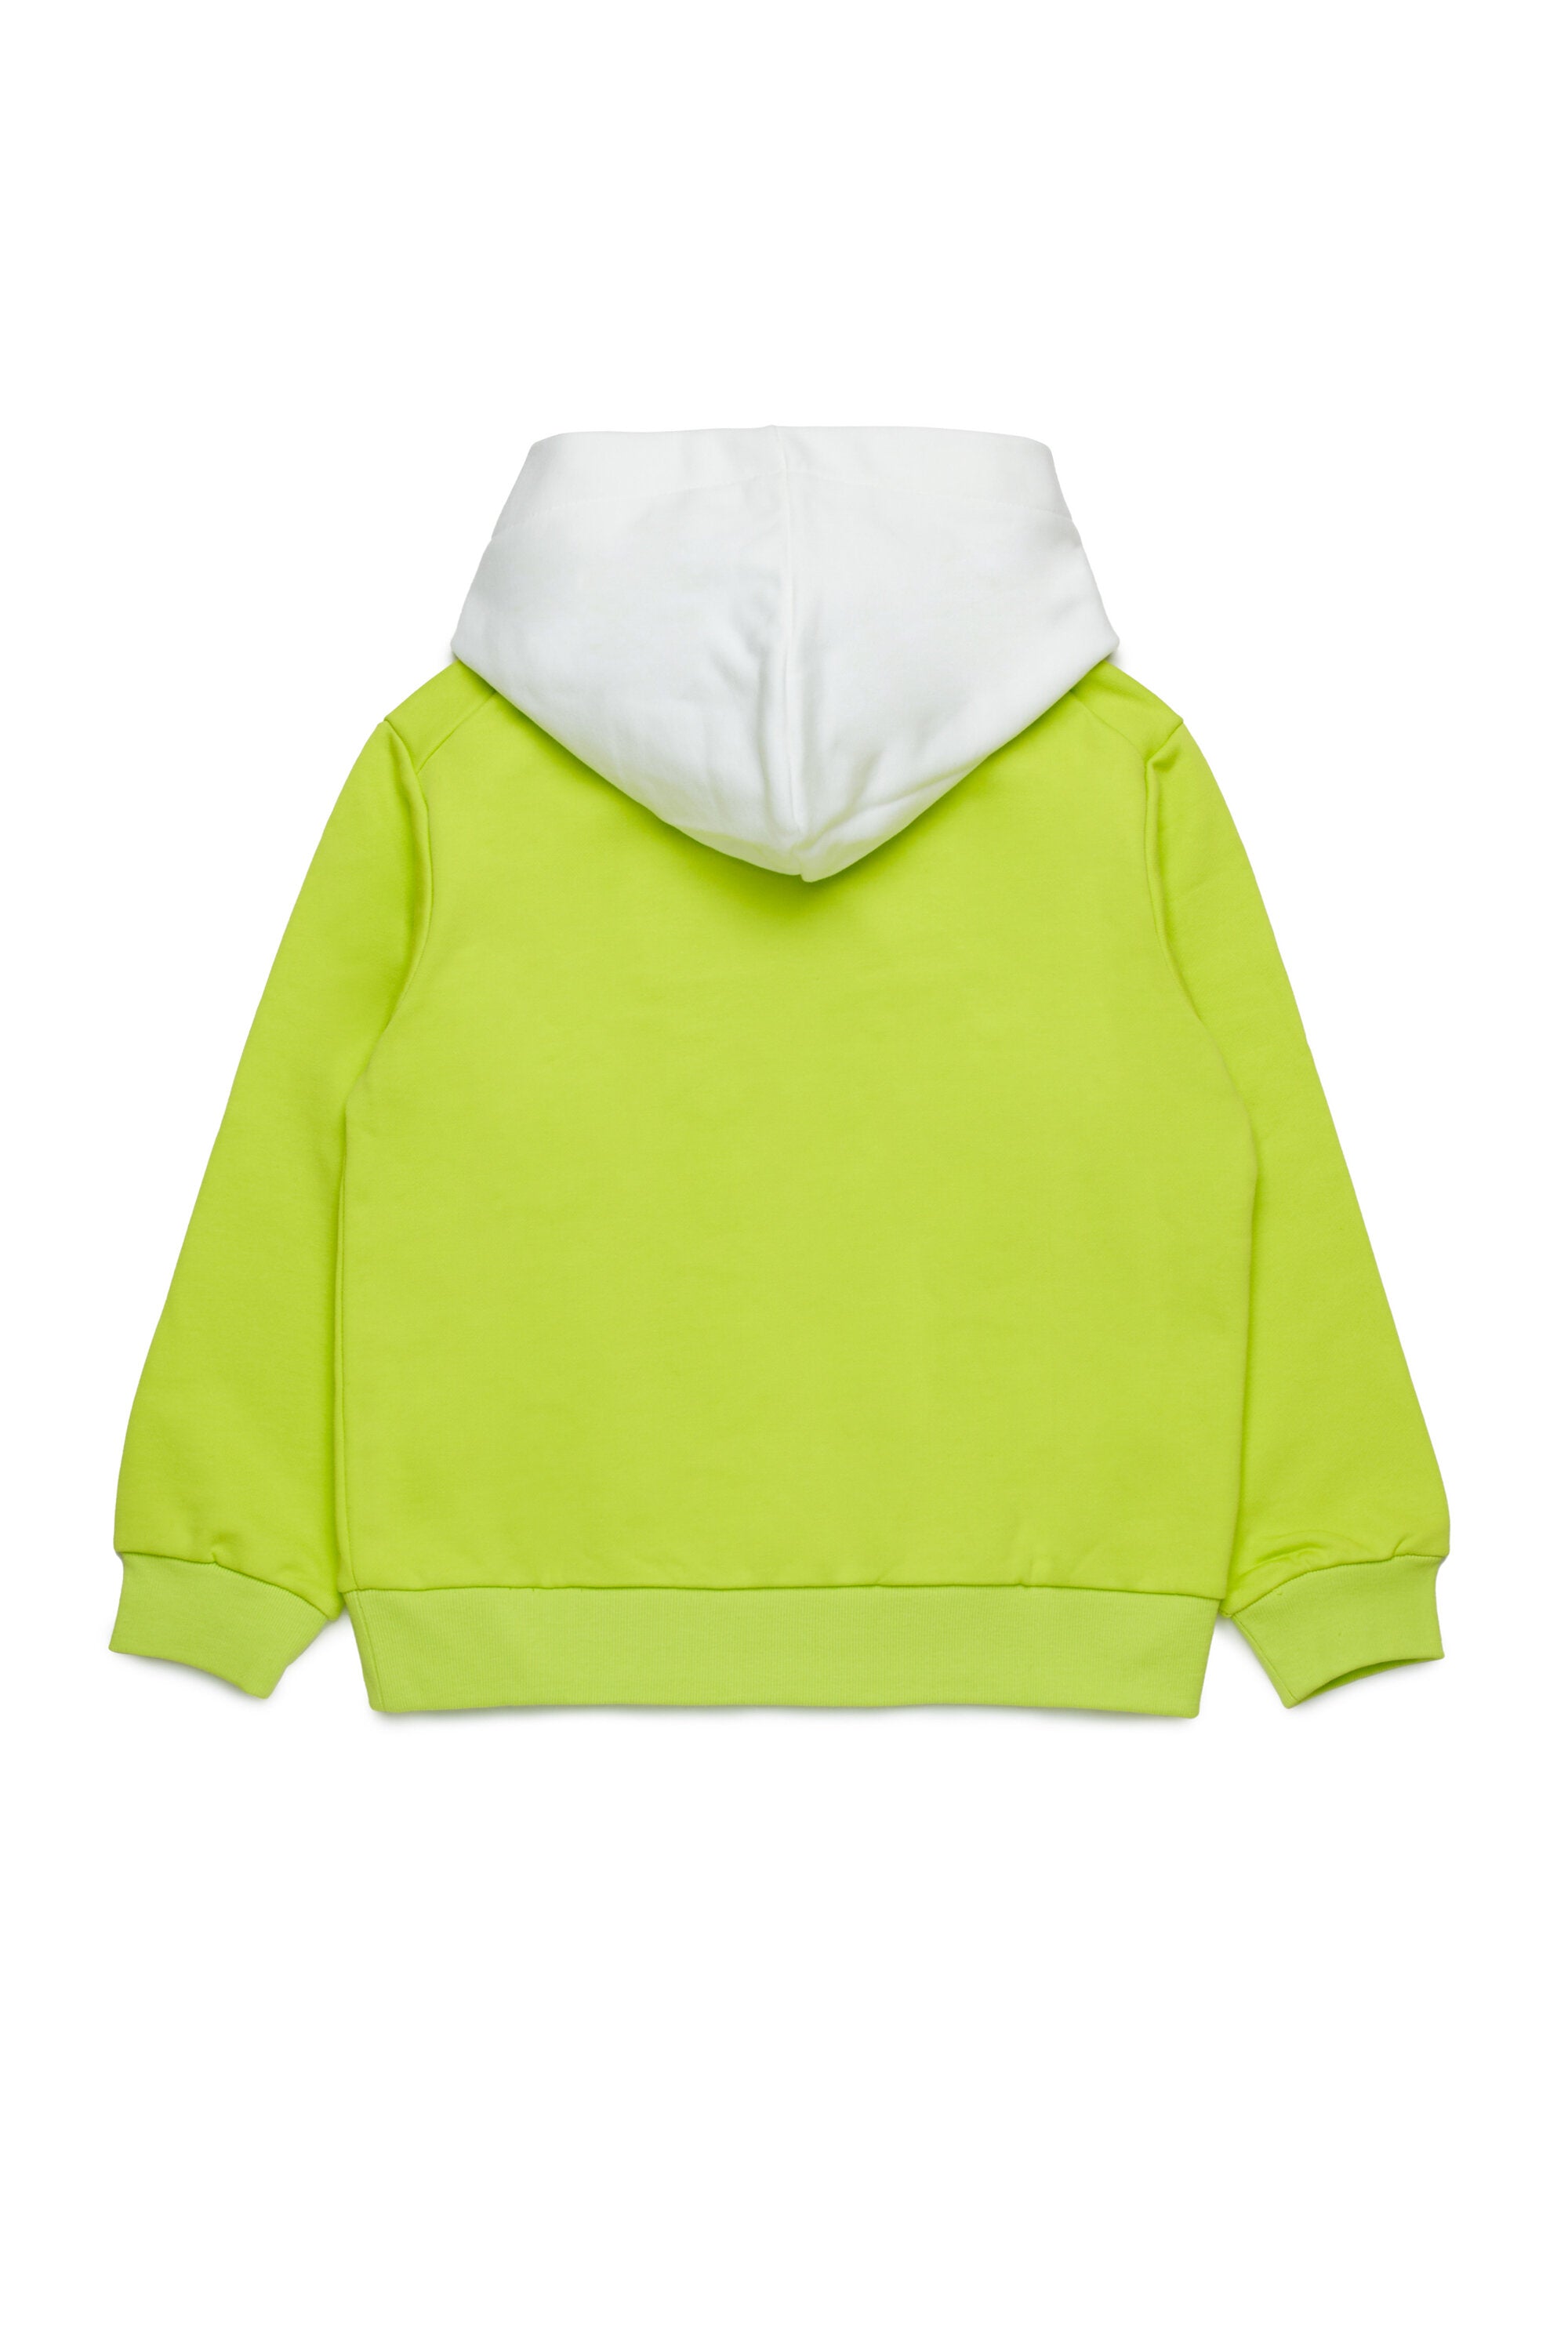 Colourblock hooded sweatshirt